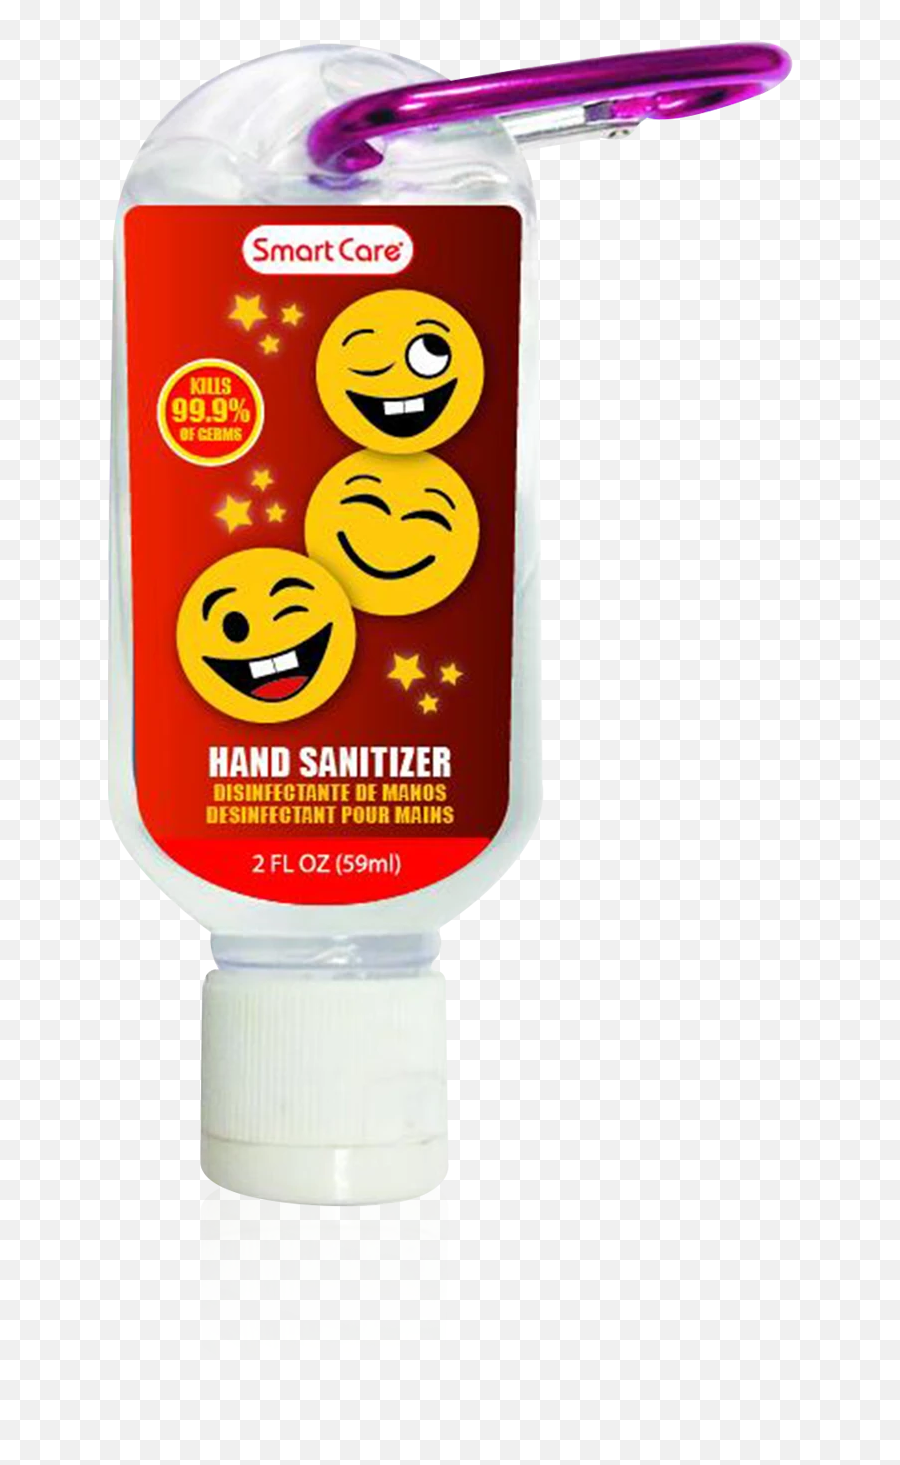 Smart Care Emoji Hand Sanitizer 2 Fl Oz - Citrus,I Don't Care Emoji